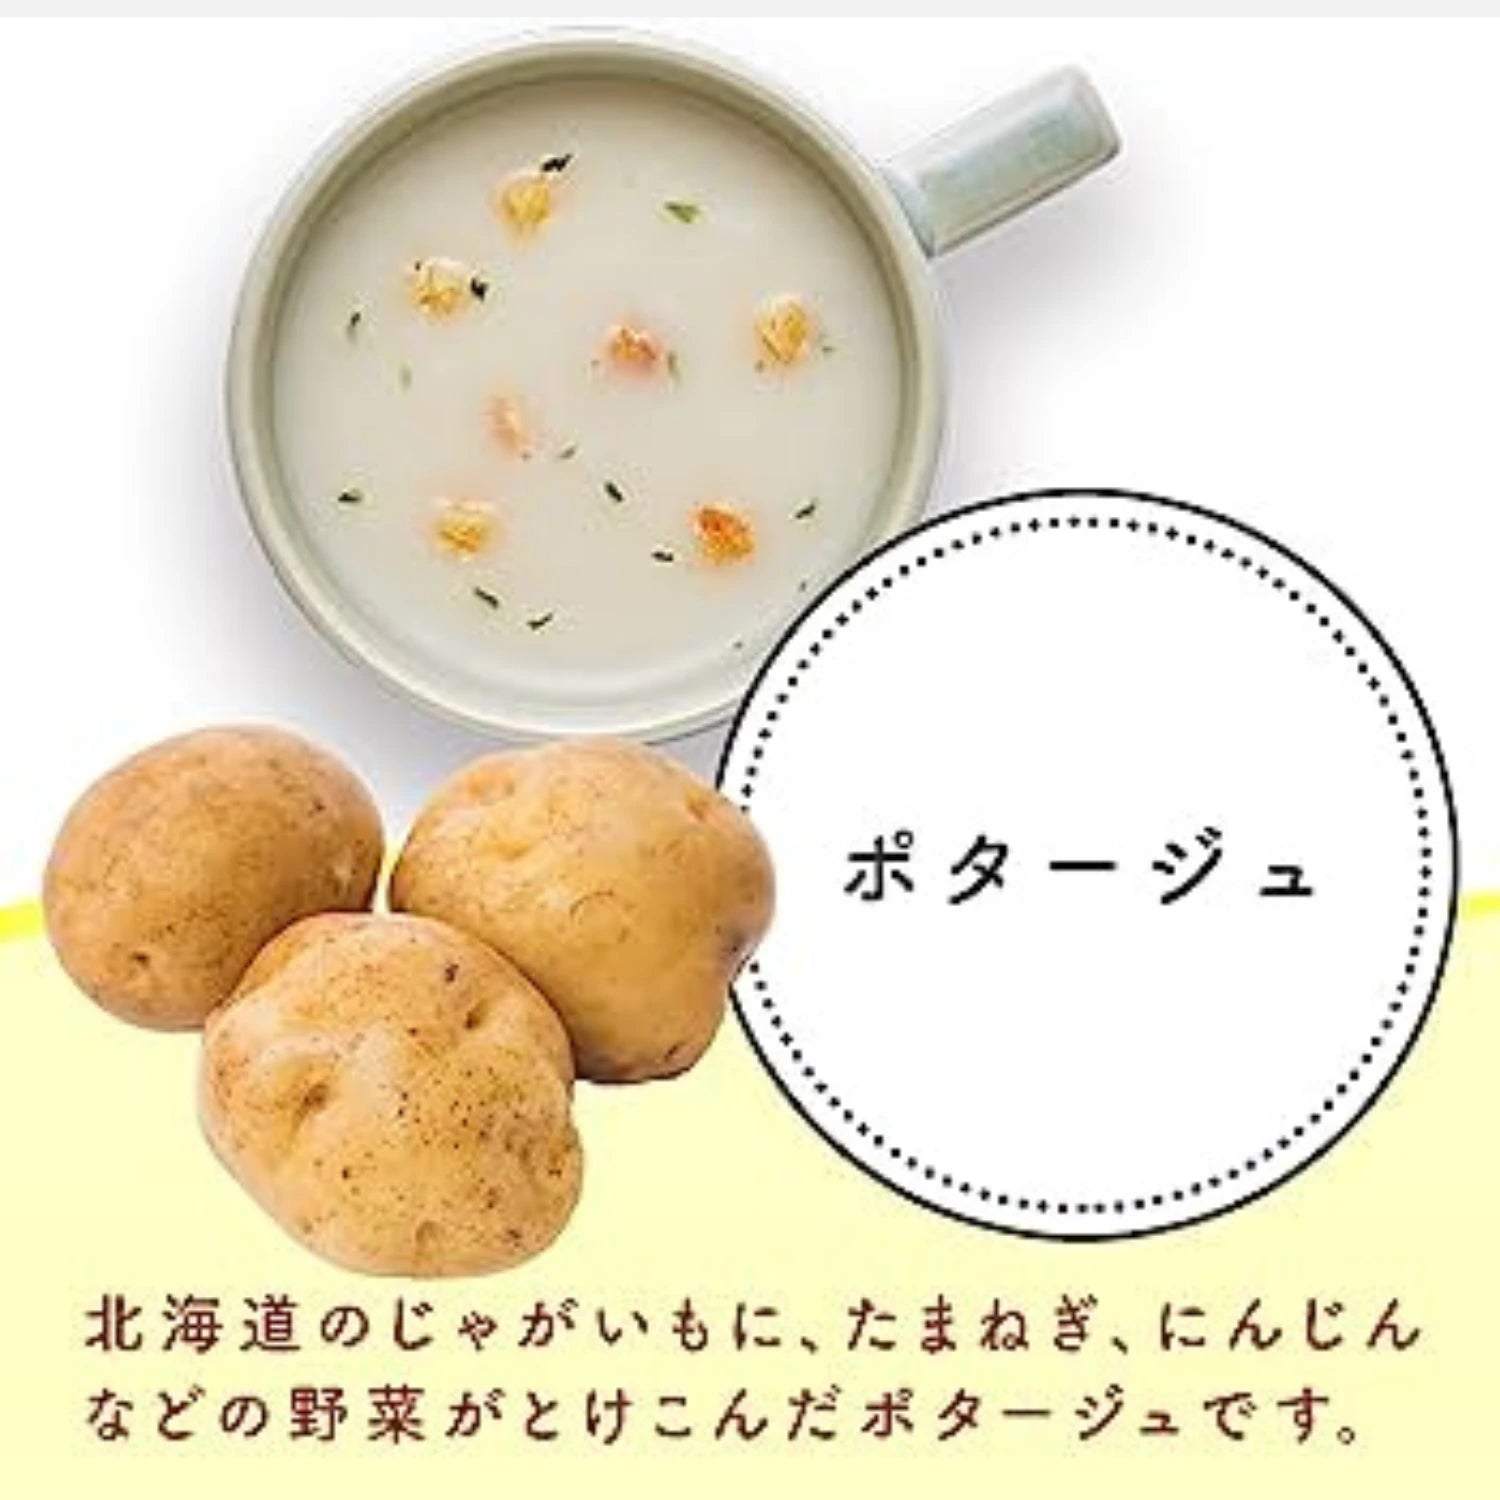 Ajinomoto Cup Soup Creamy Potato (Pack of 8) - Buy Me Japan